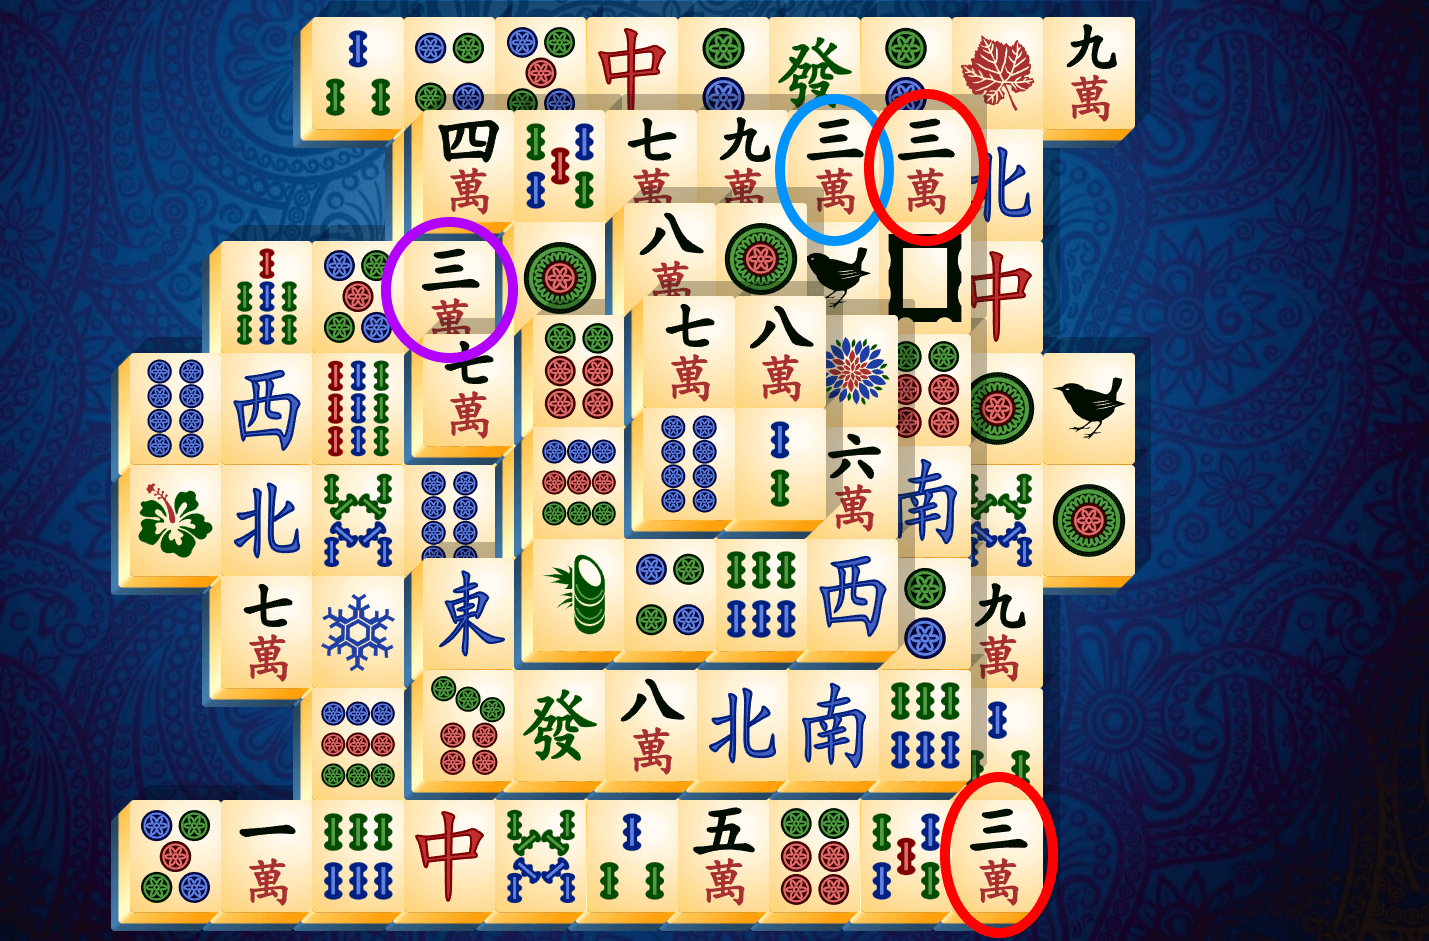 Samouczek Mahjonga jednoosobowego, krok 8